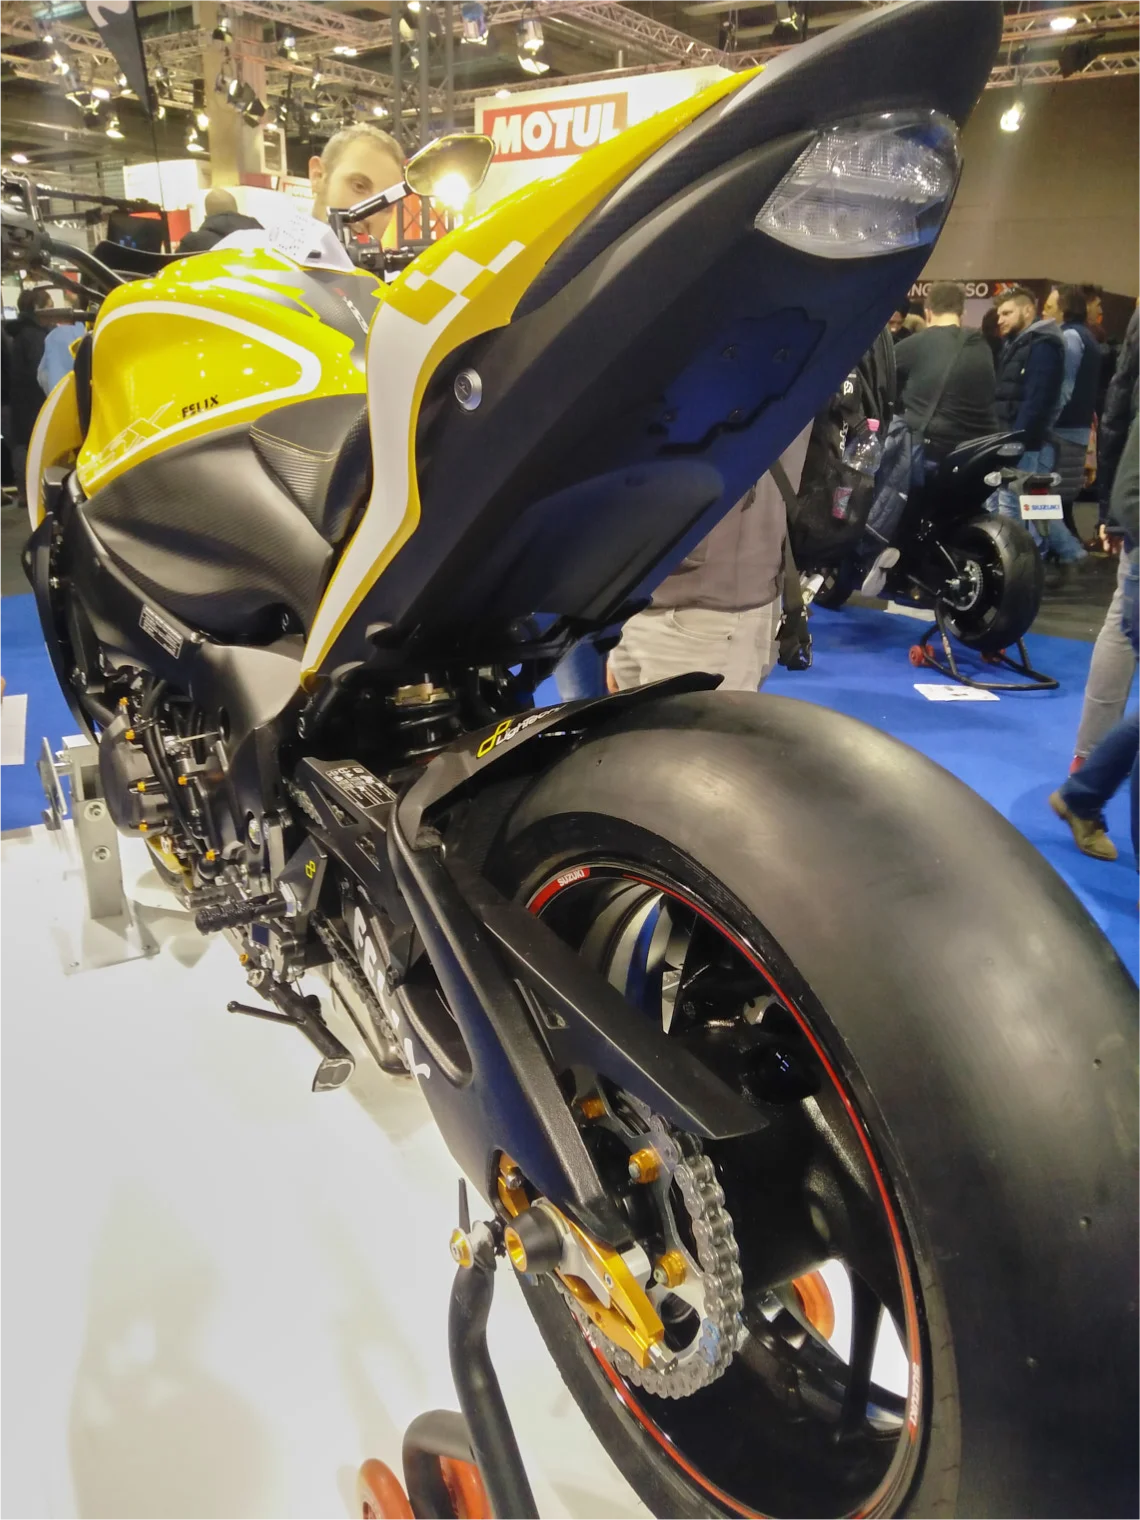 Motor Bike Expo 2017 - Suzuki